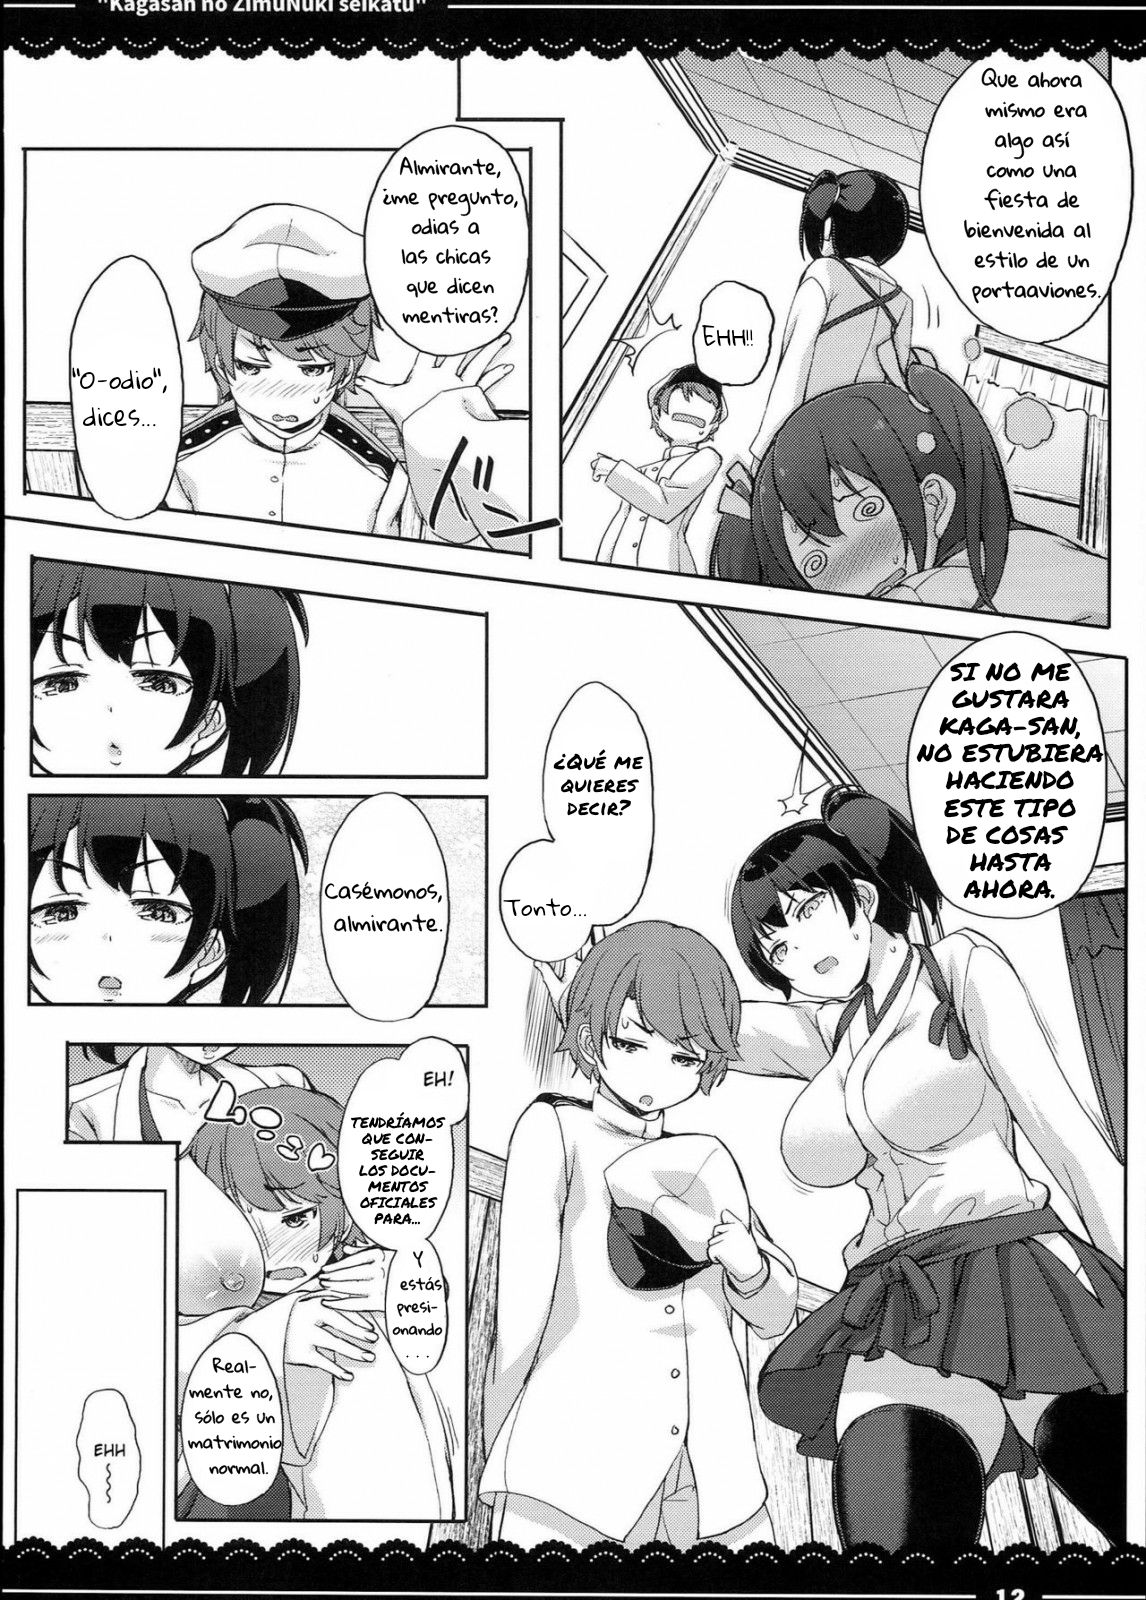 kaga-san's work skipping sex life-chapter 1 - 12